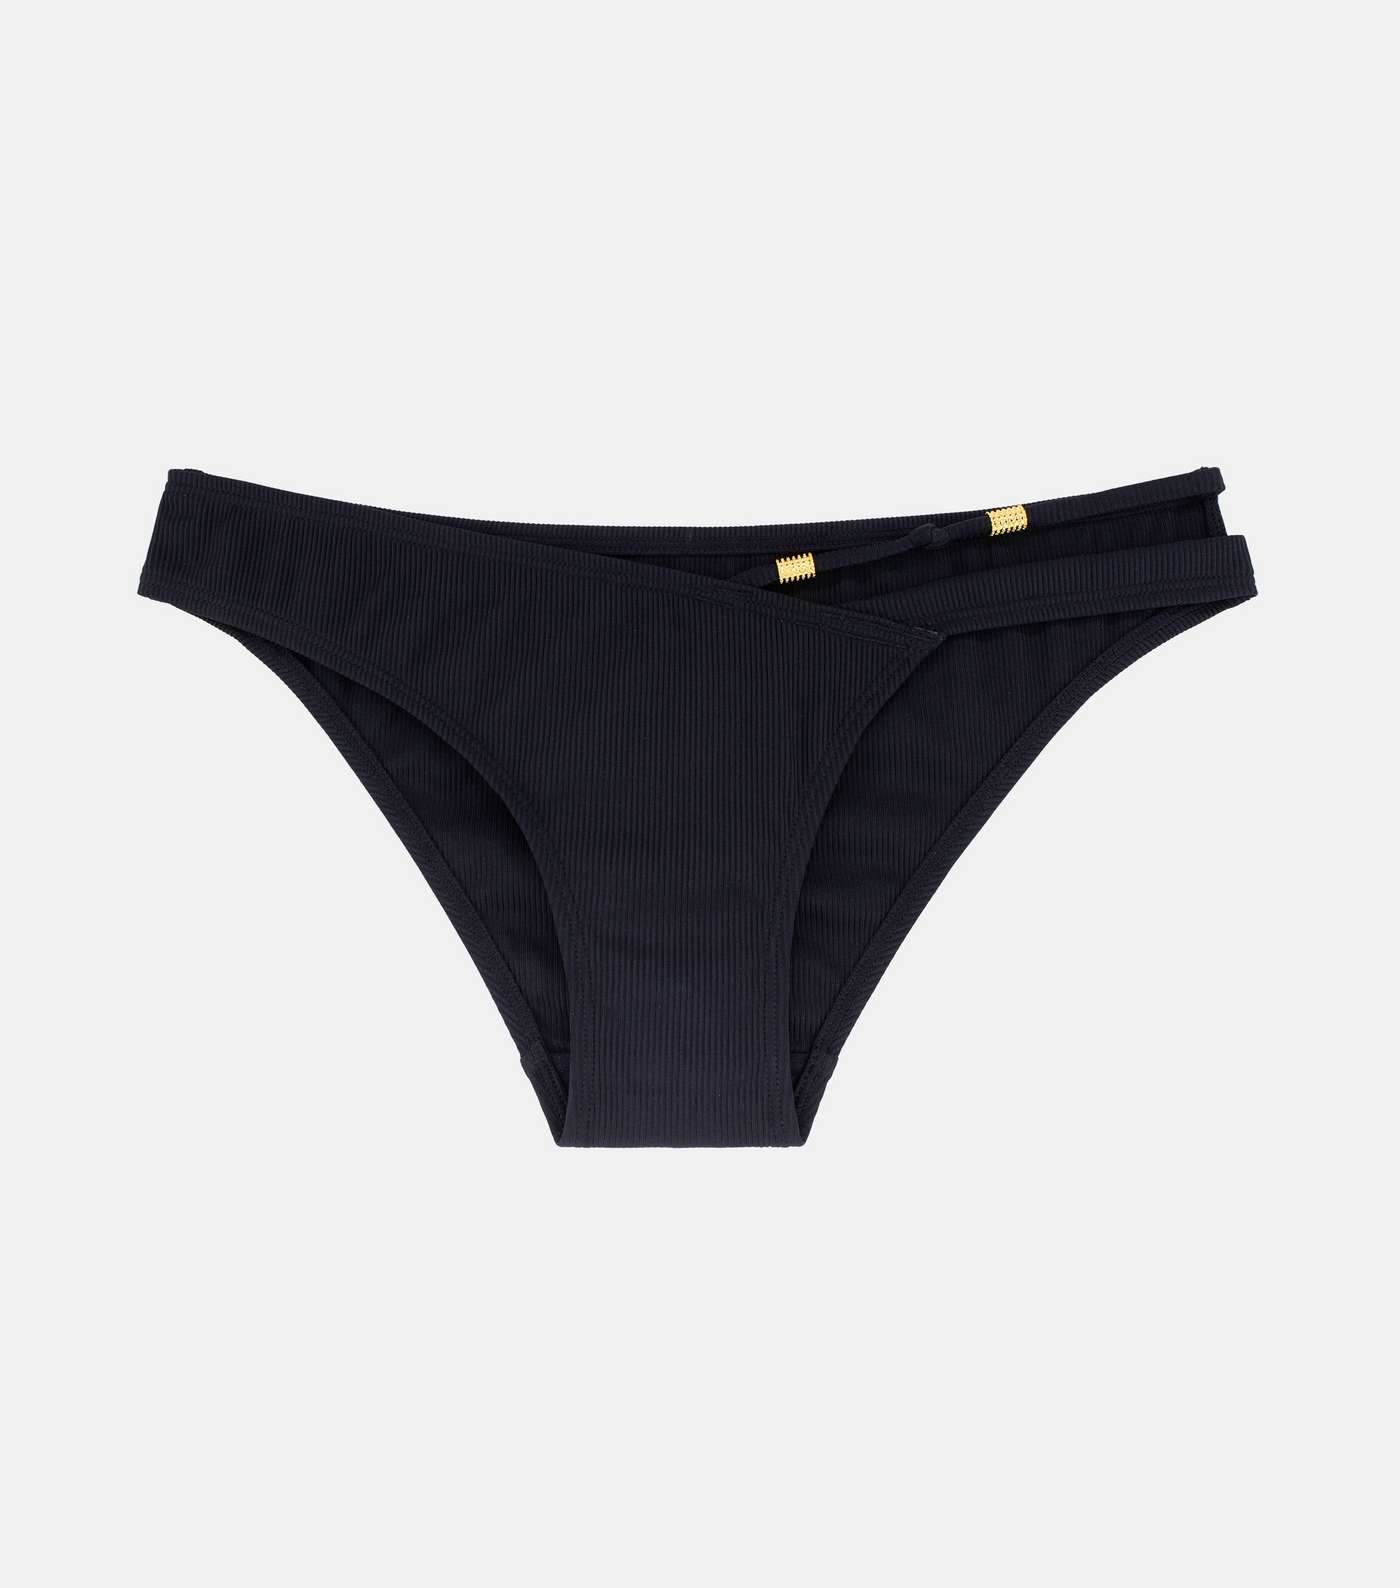 Dorina Black Asymmetric Brazilian Bikini Bottoms Image 5